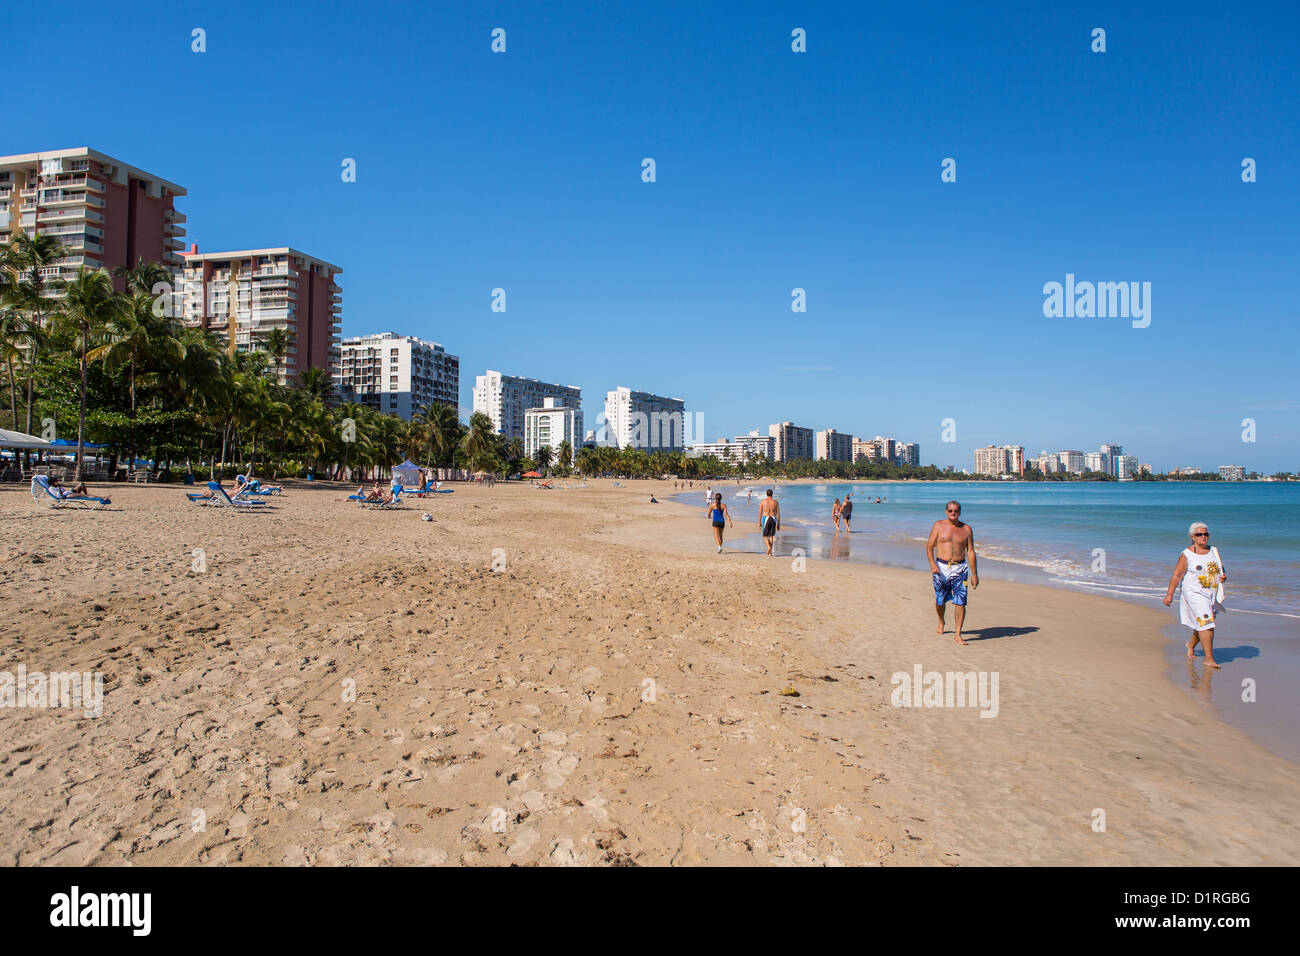 SAN JUAN, PUERTO RICO - Isla Verde Beach resort area. Foto Stock